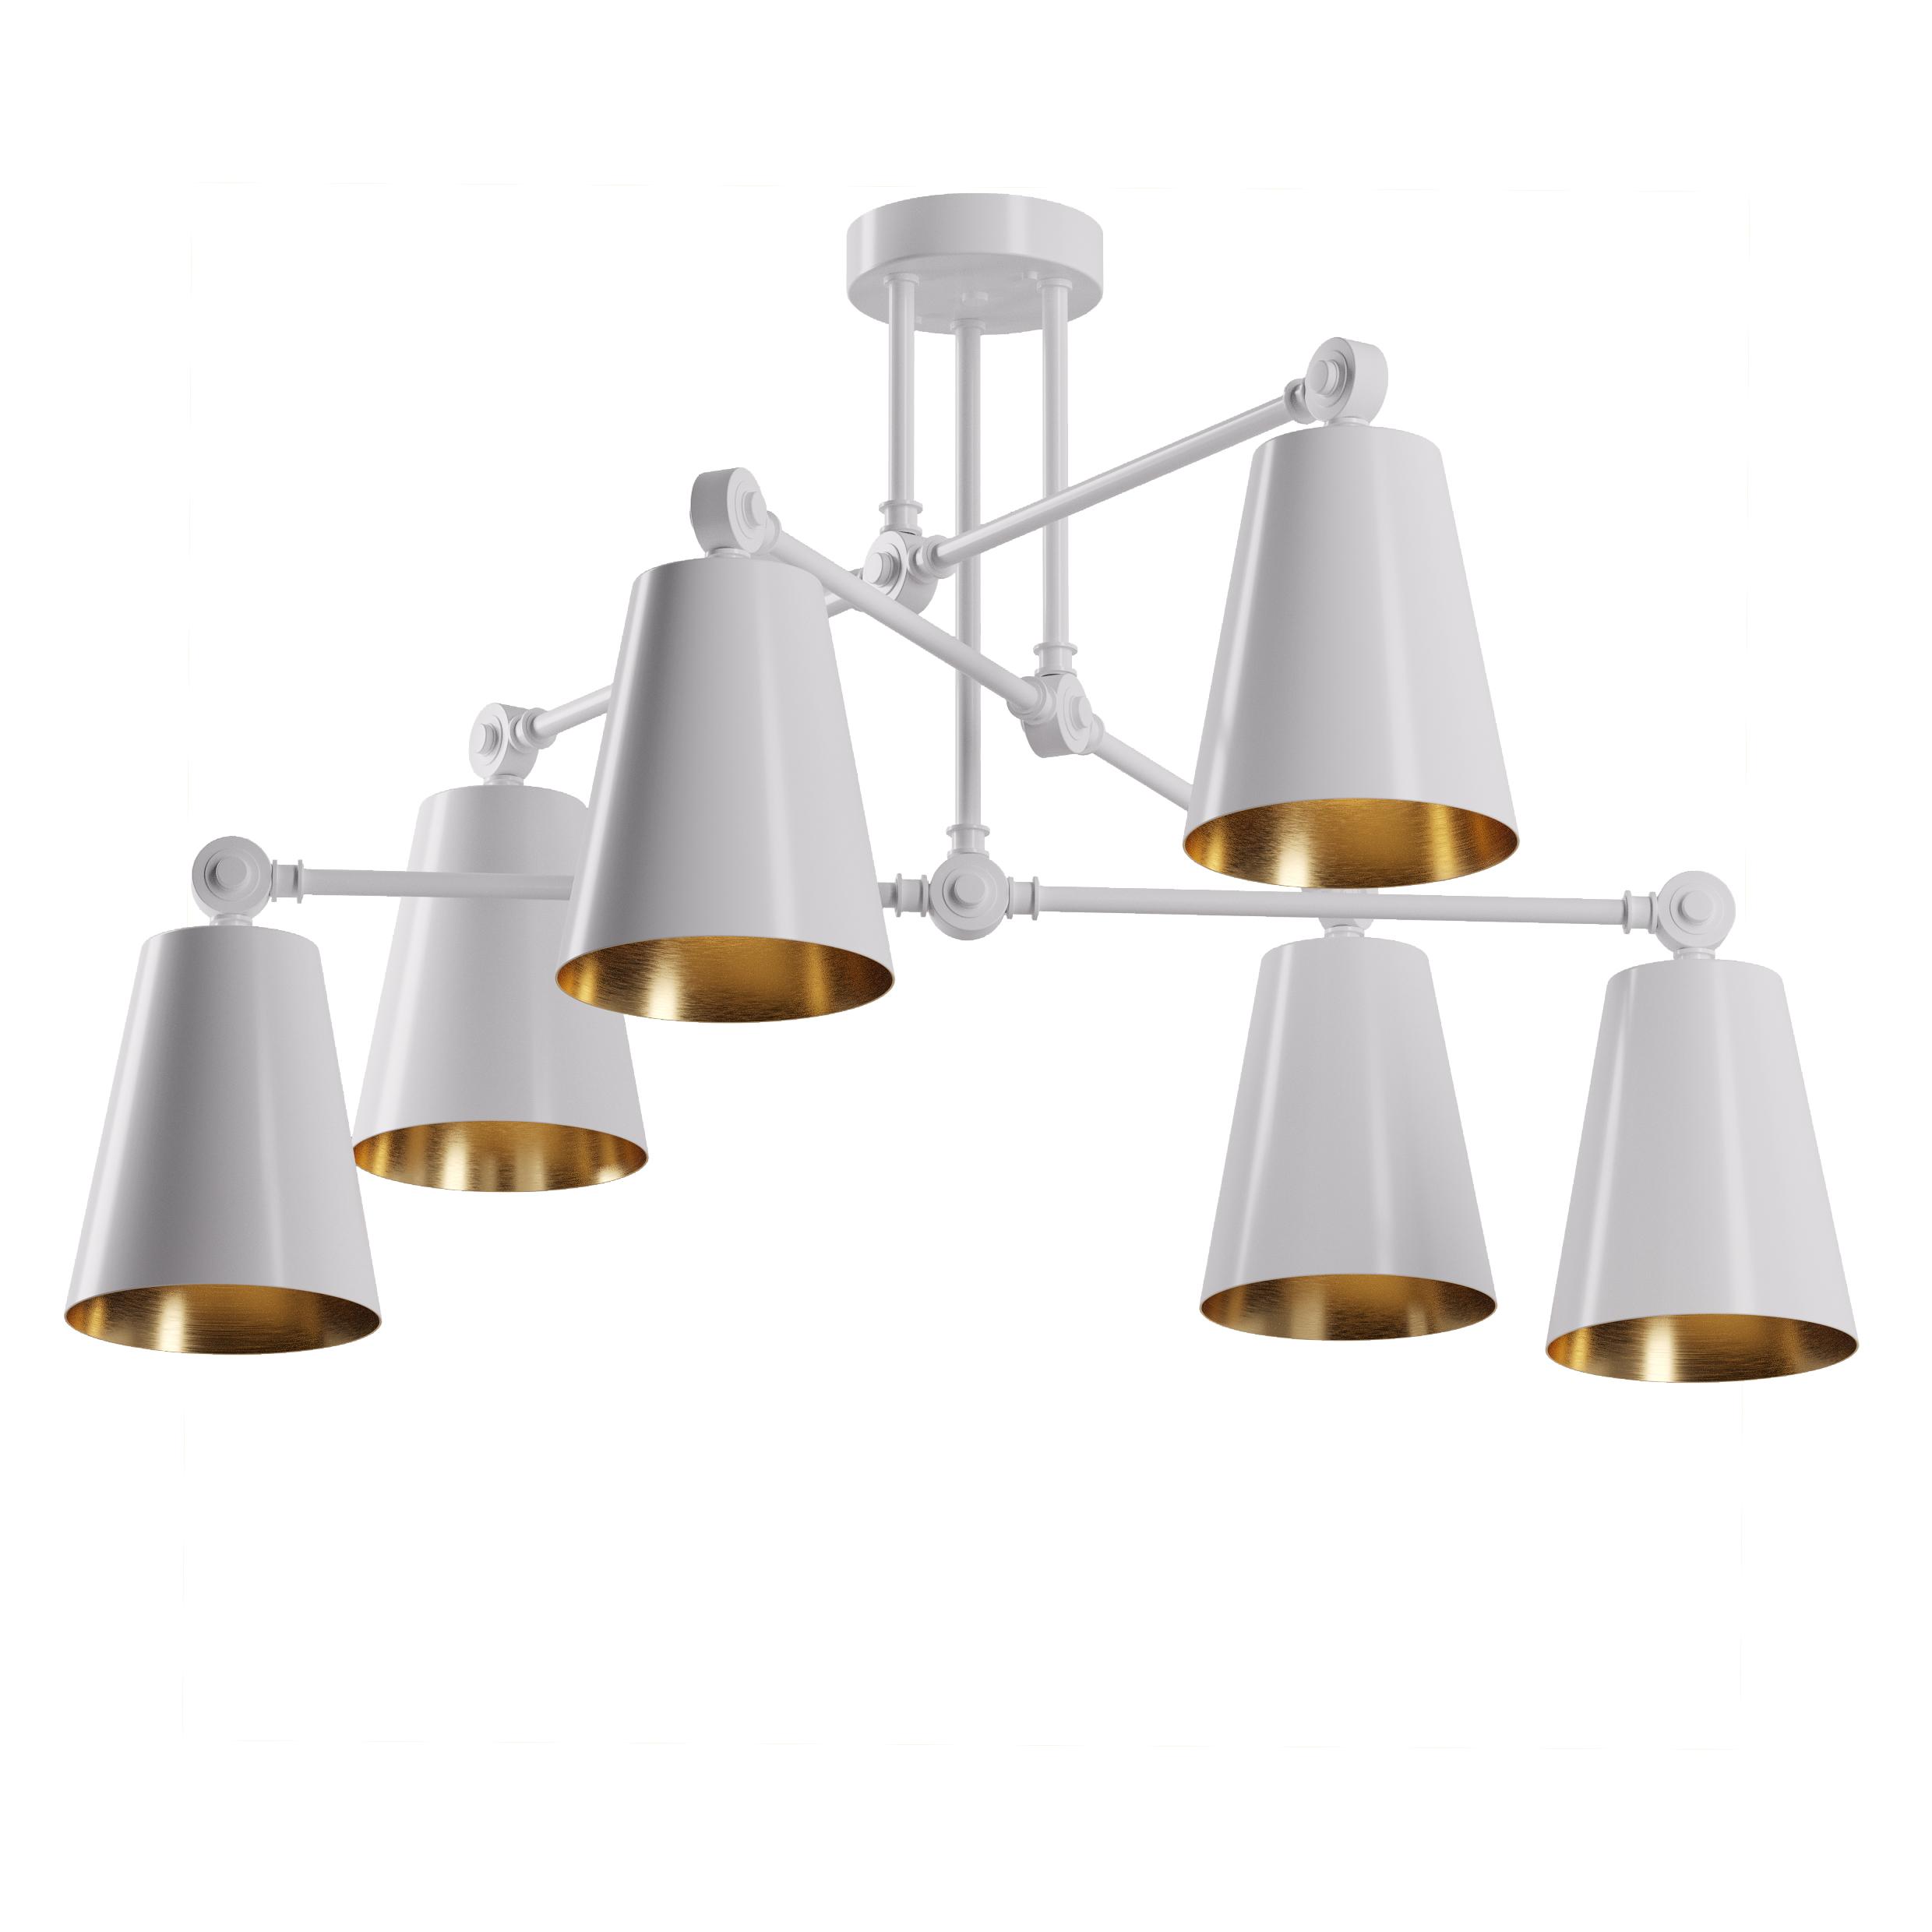 Sia V6 lamp, SKU. 5648 by Pikartlights 3d model